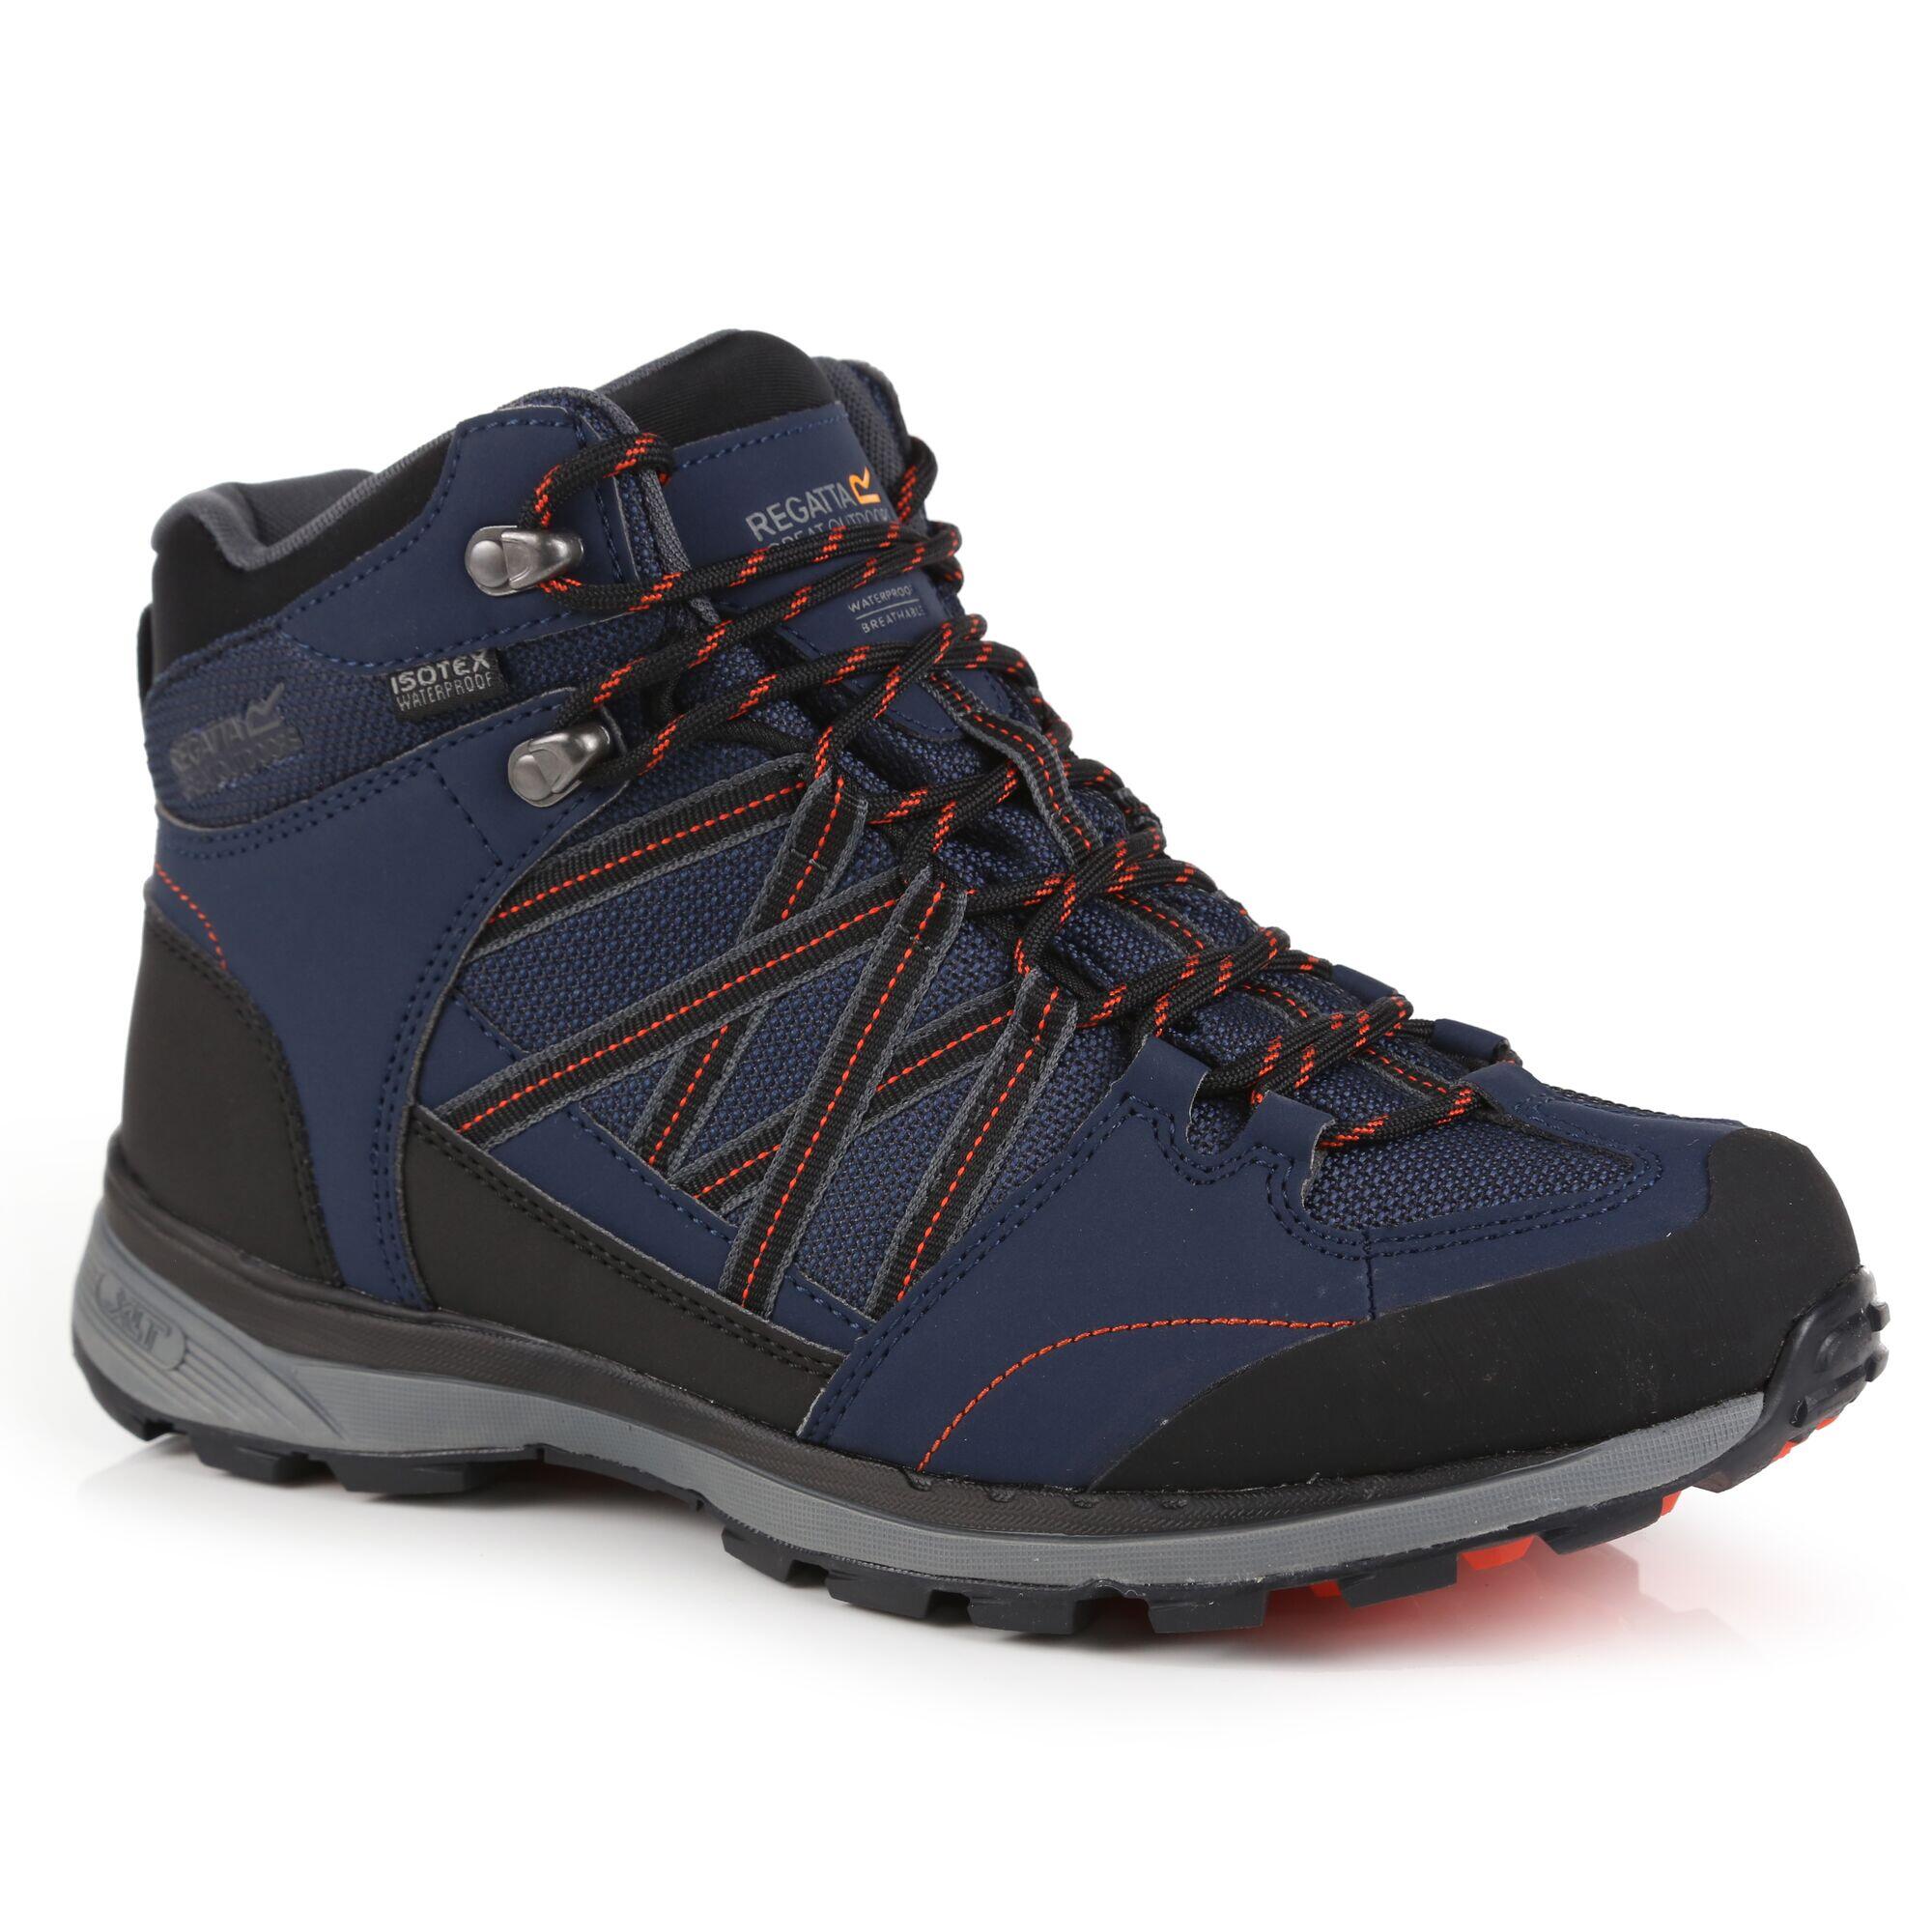 REGATTA Samaris II Men's Hiking Boots - Navy/Orange